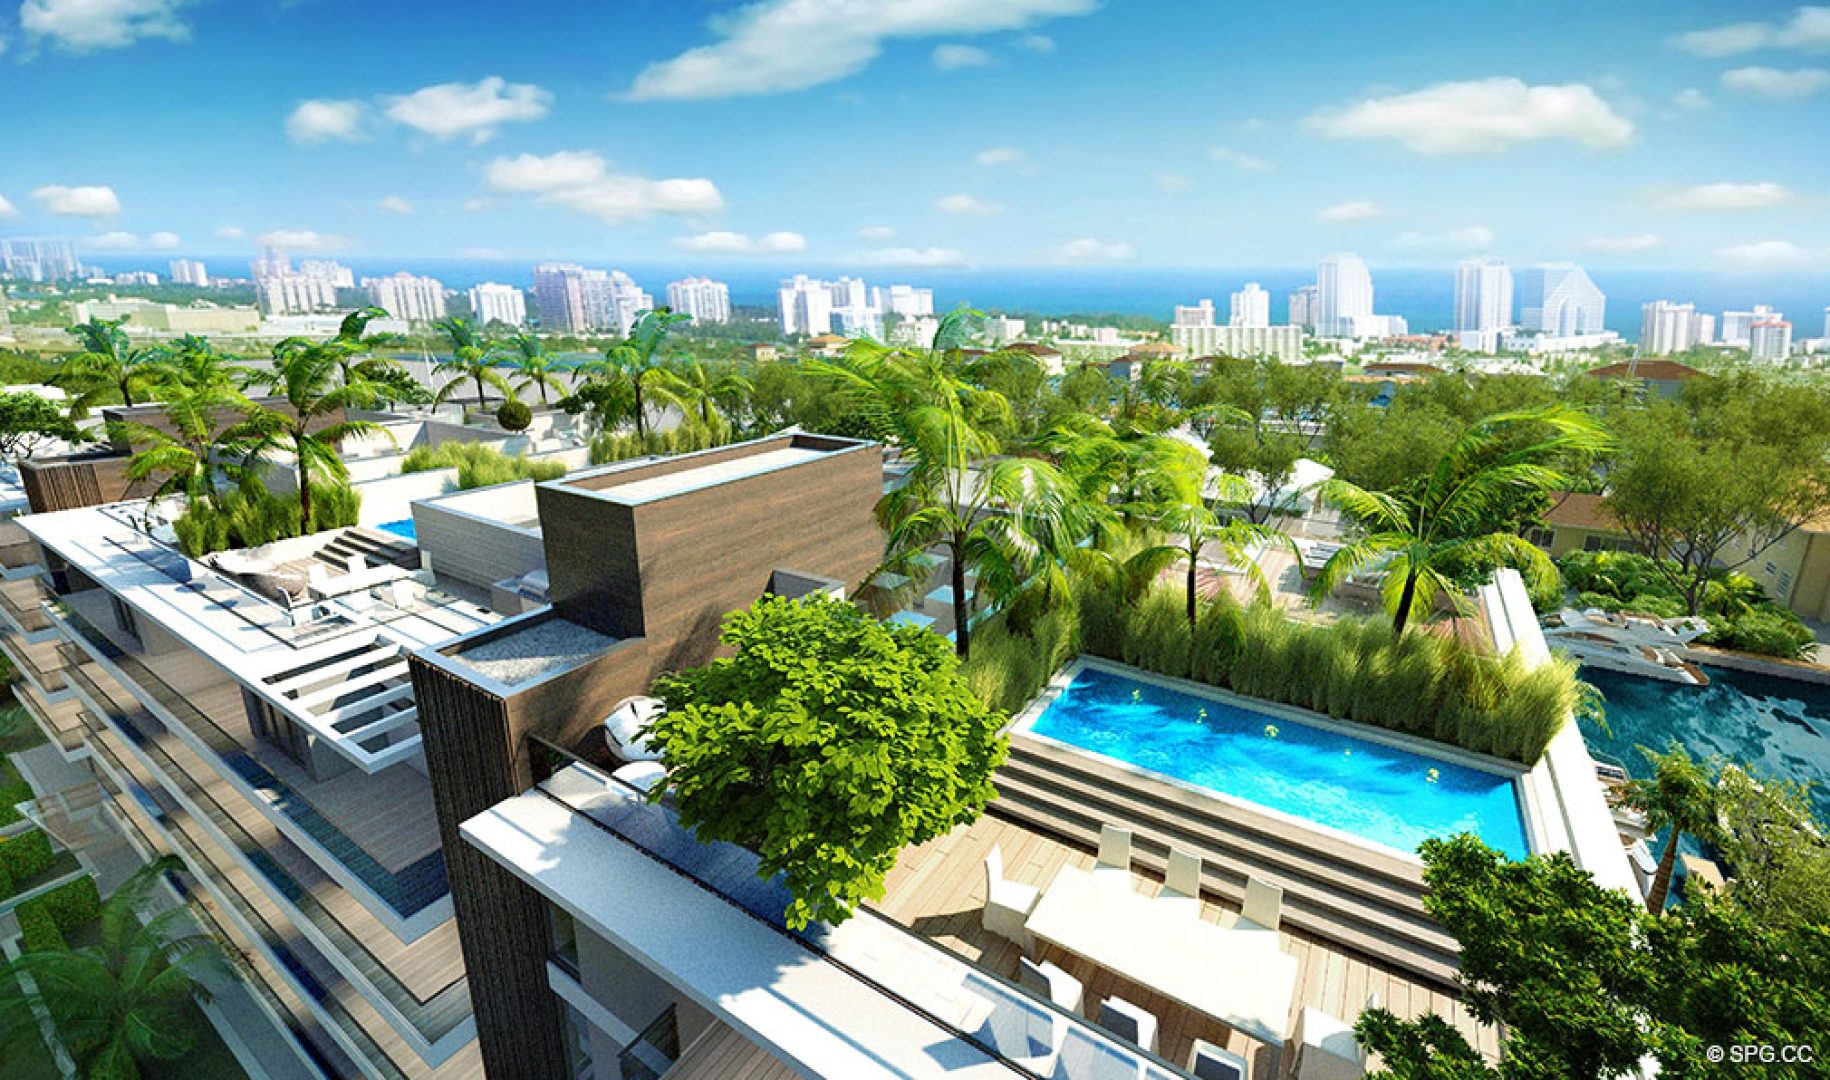 Amazing Roof Terrace at AquaLuna Las Olas, Luxury Waterfront Condos in Fort Lauderdale, Florida 33301